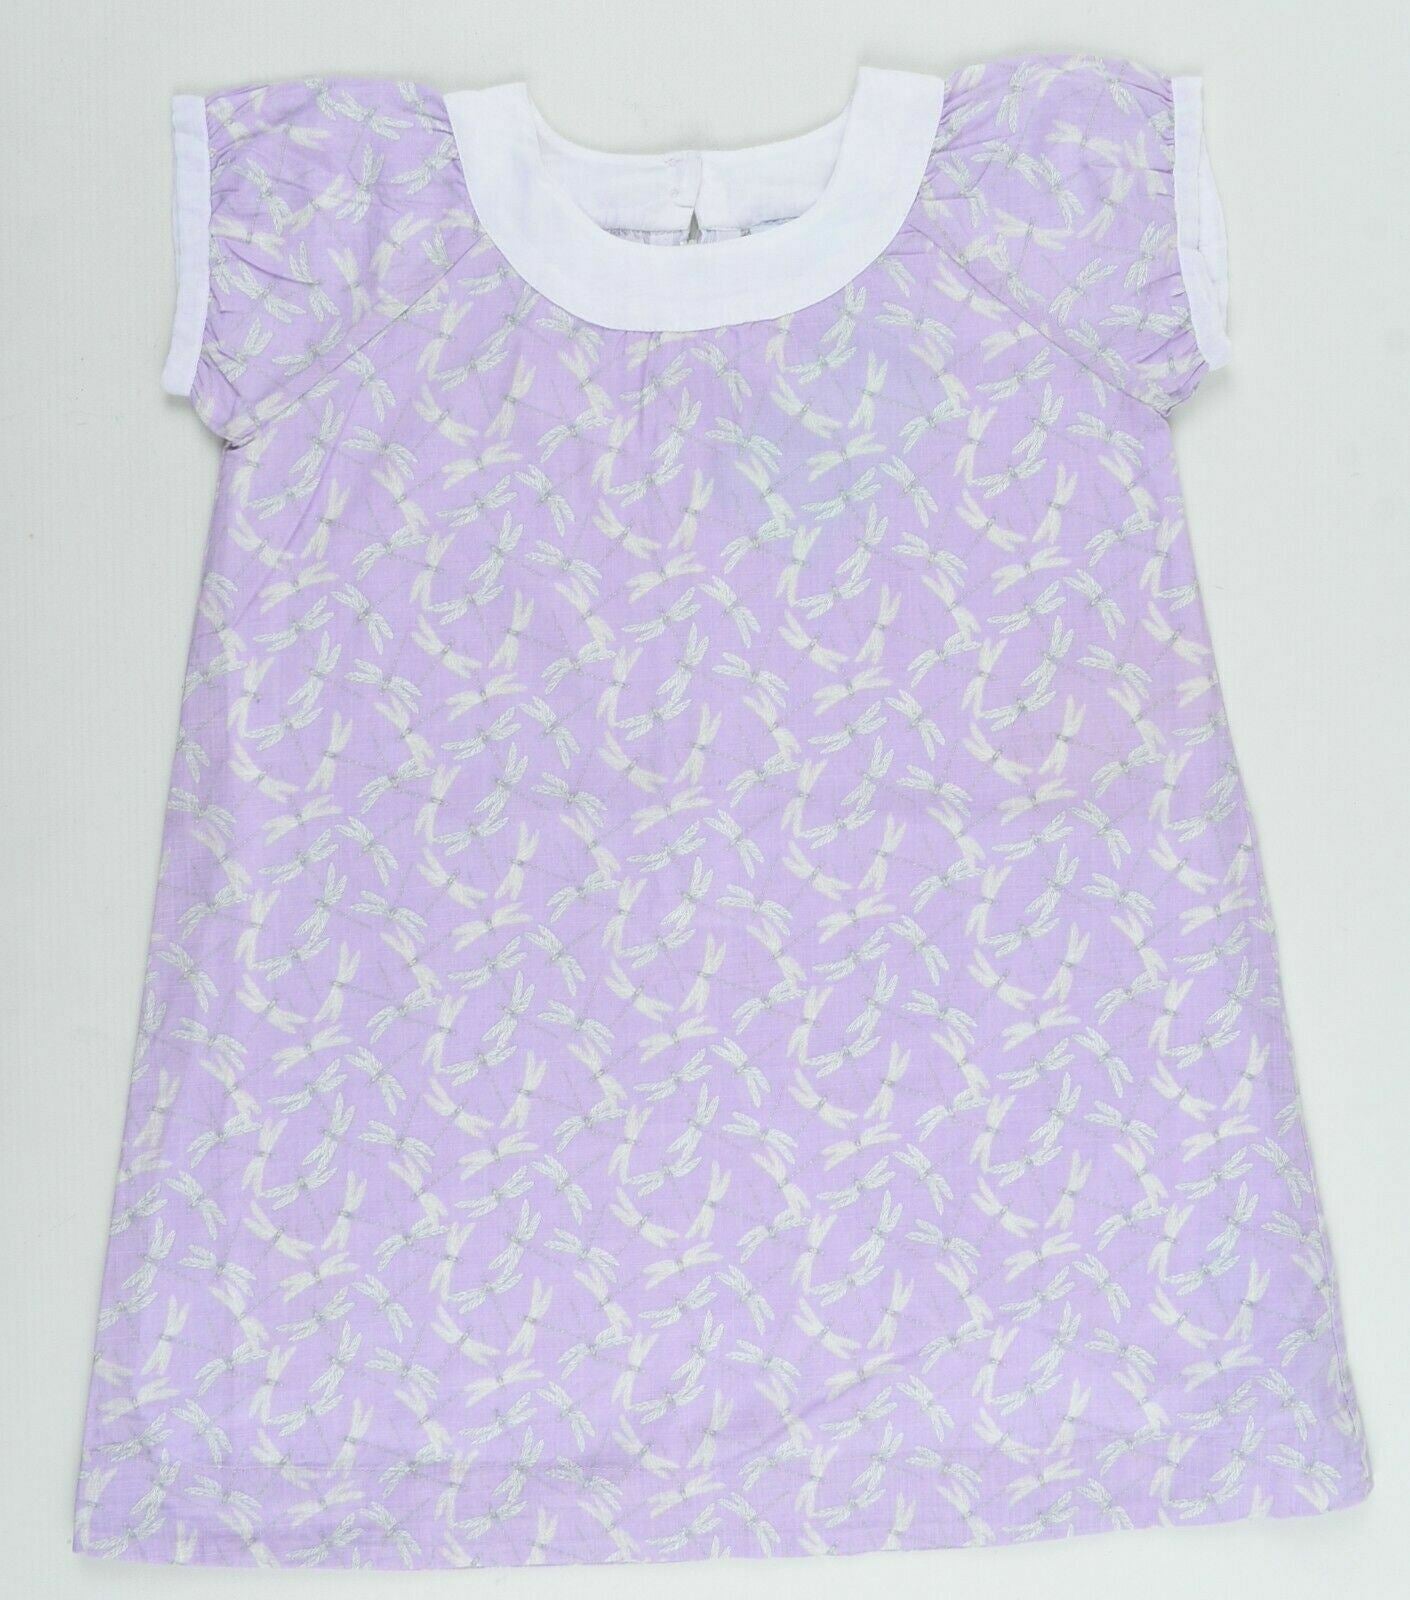 ELIZABETH HURLEY Girls' Summer Dress, Purple / Dragonfly Print, 2 y to 3 years